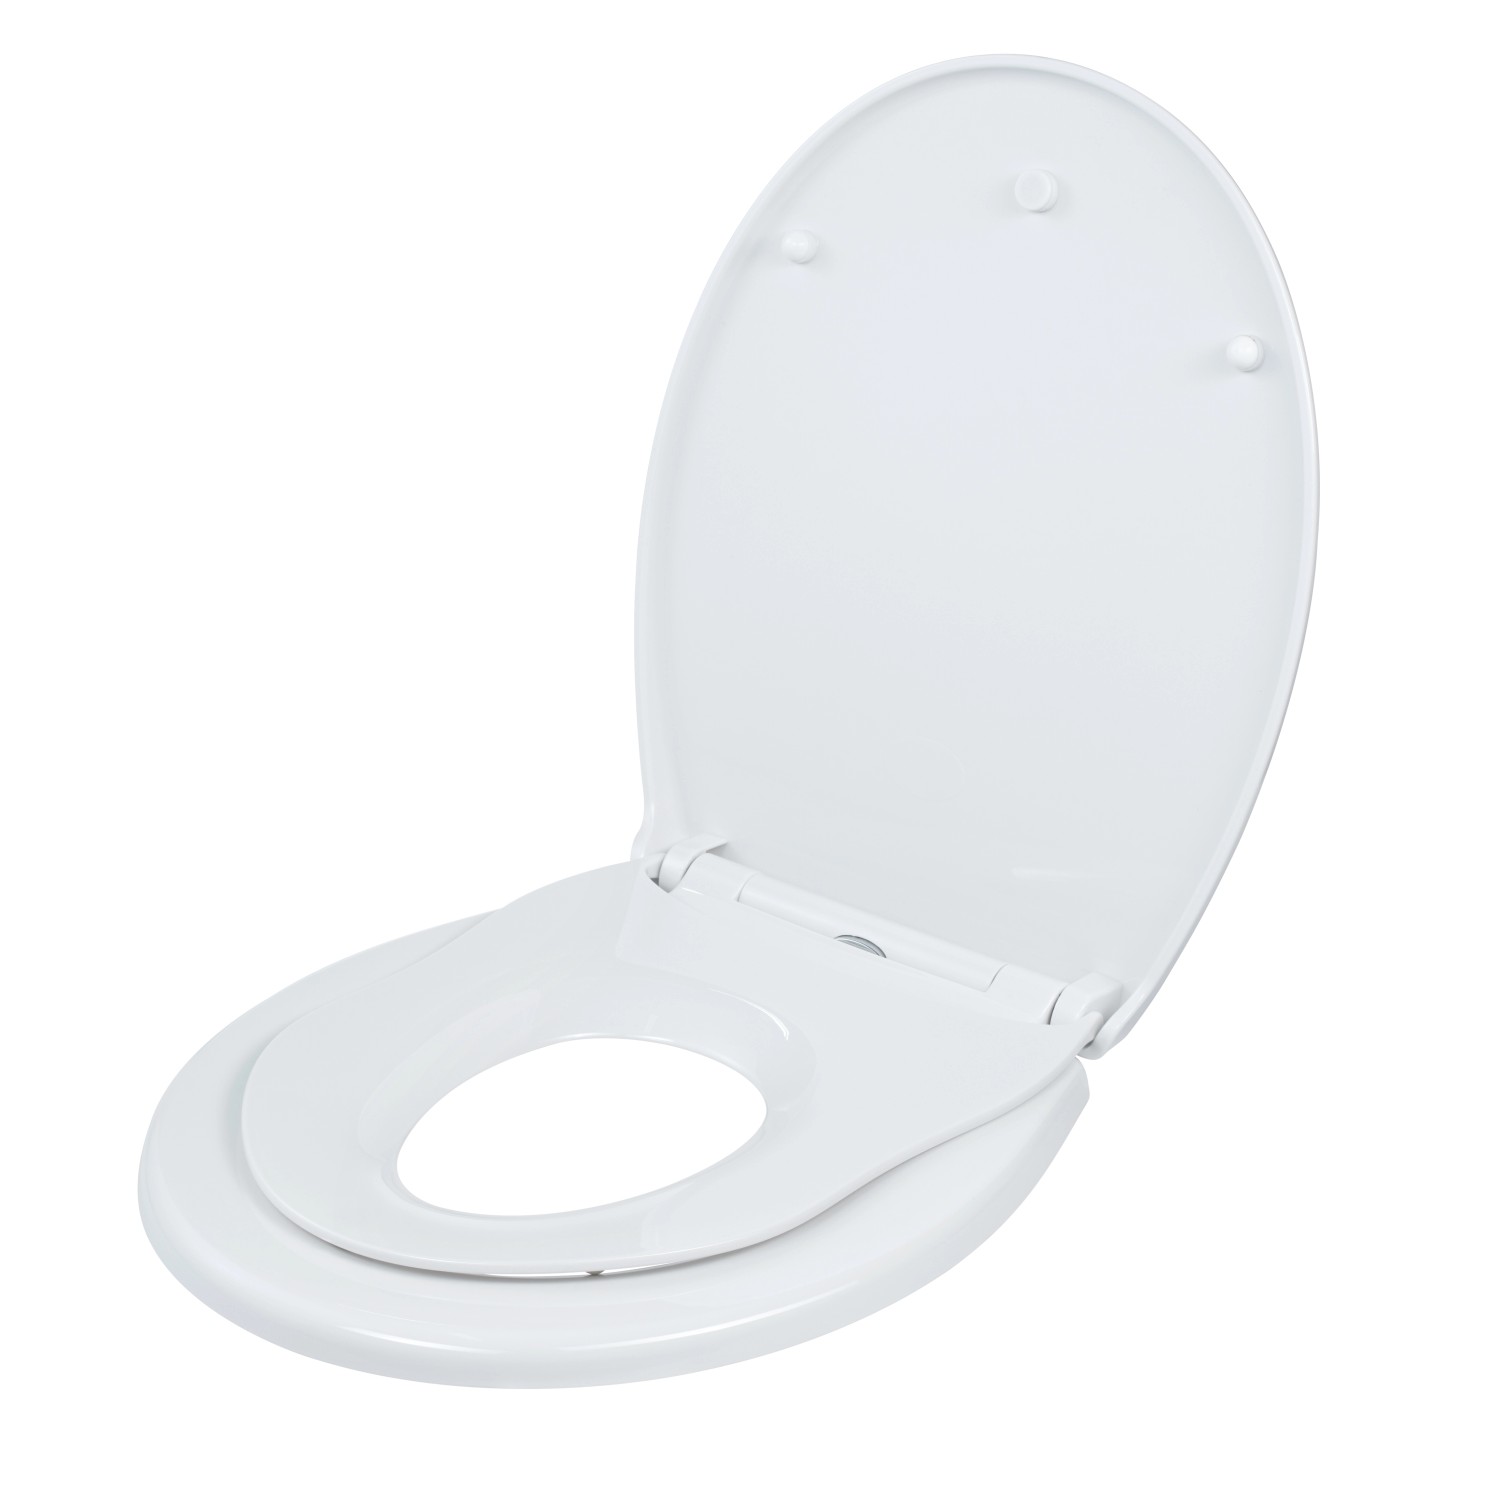 Diaqua TINO Family Siège de toilette avec garniture pour enfant - Blanc